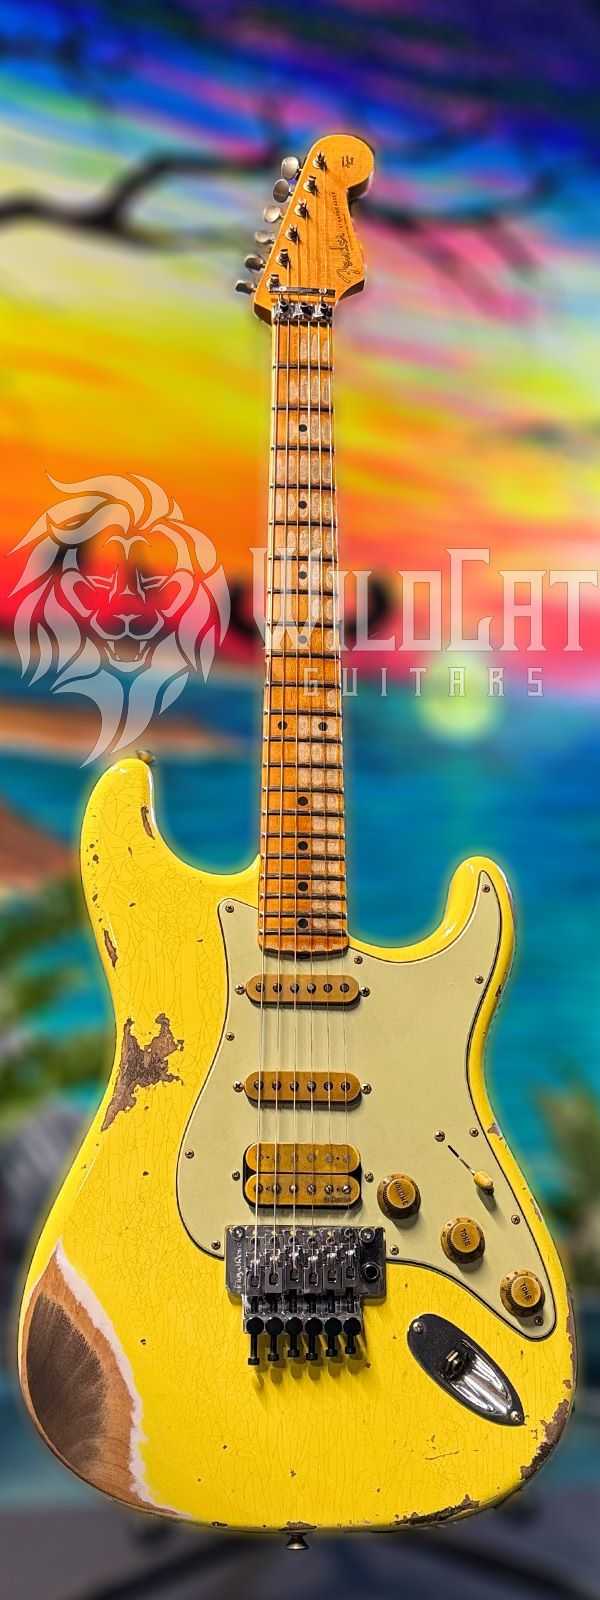 WildCat Exclusive Fender Custom Shop Alley Cat Strat “Modern” Graffiti Yellow R132939